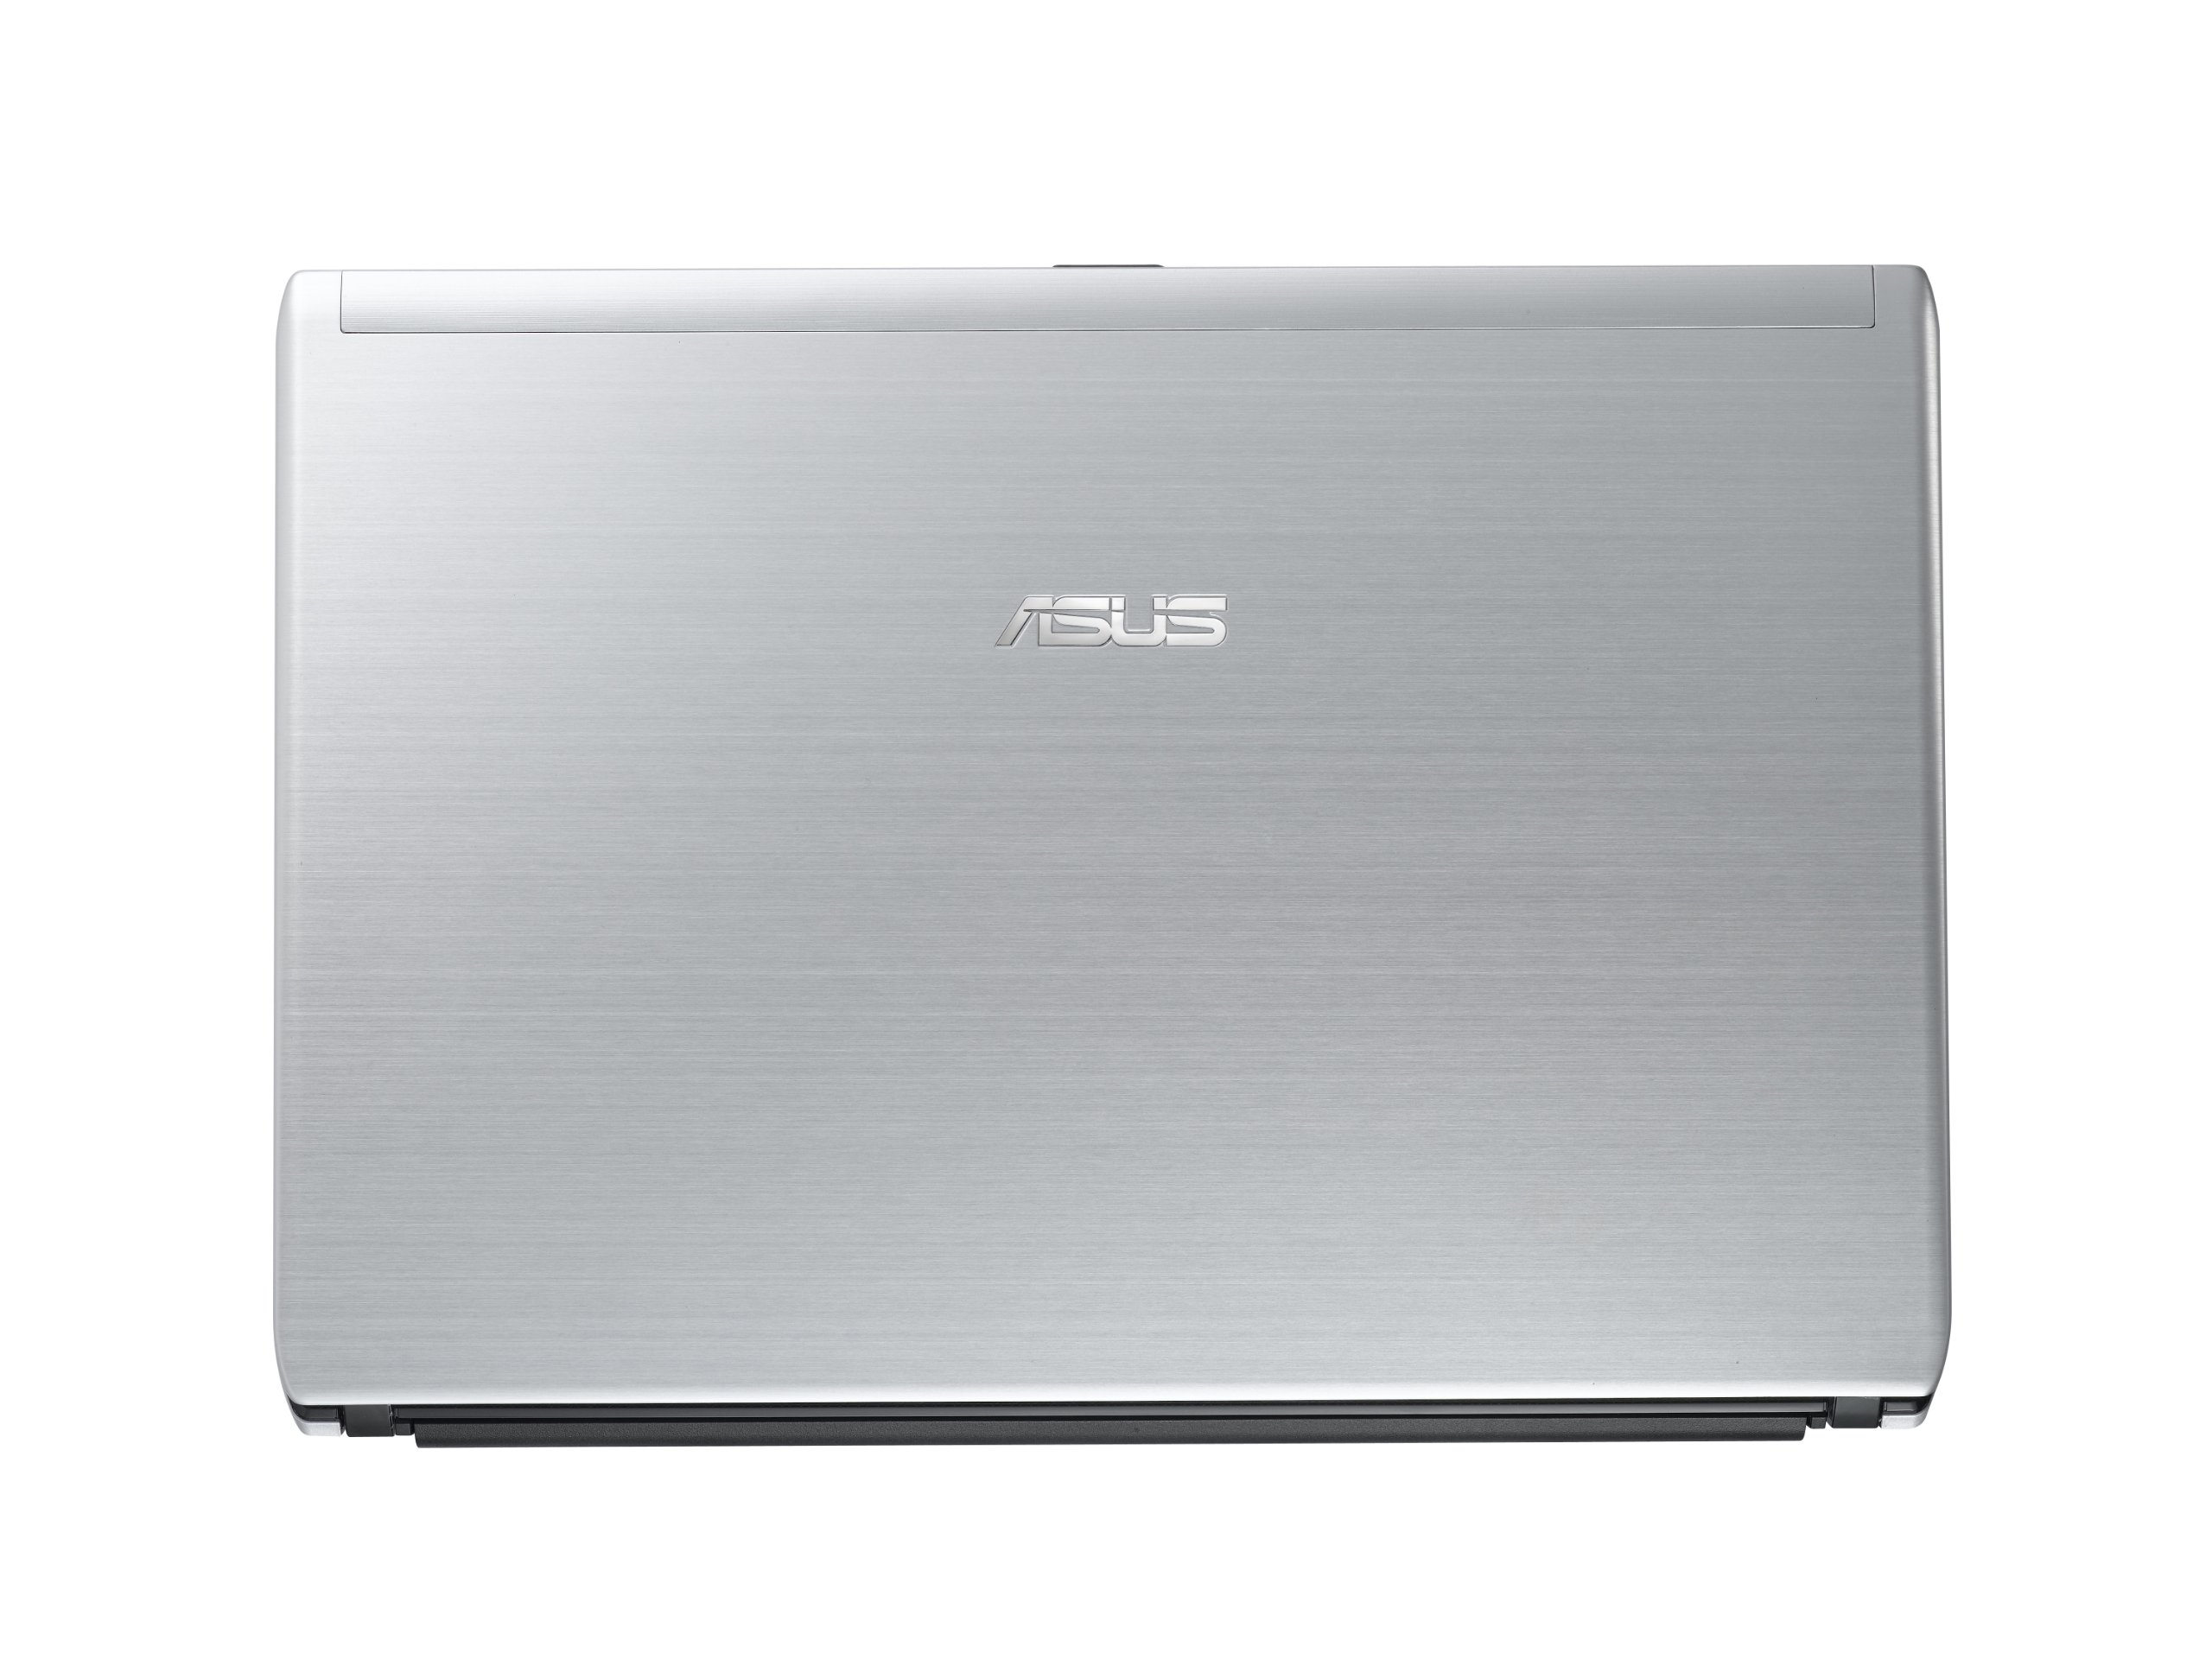 Asus U31JG-A1 13.3-Inch Laptop (Silver)